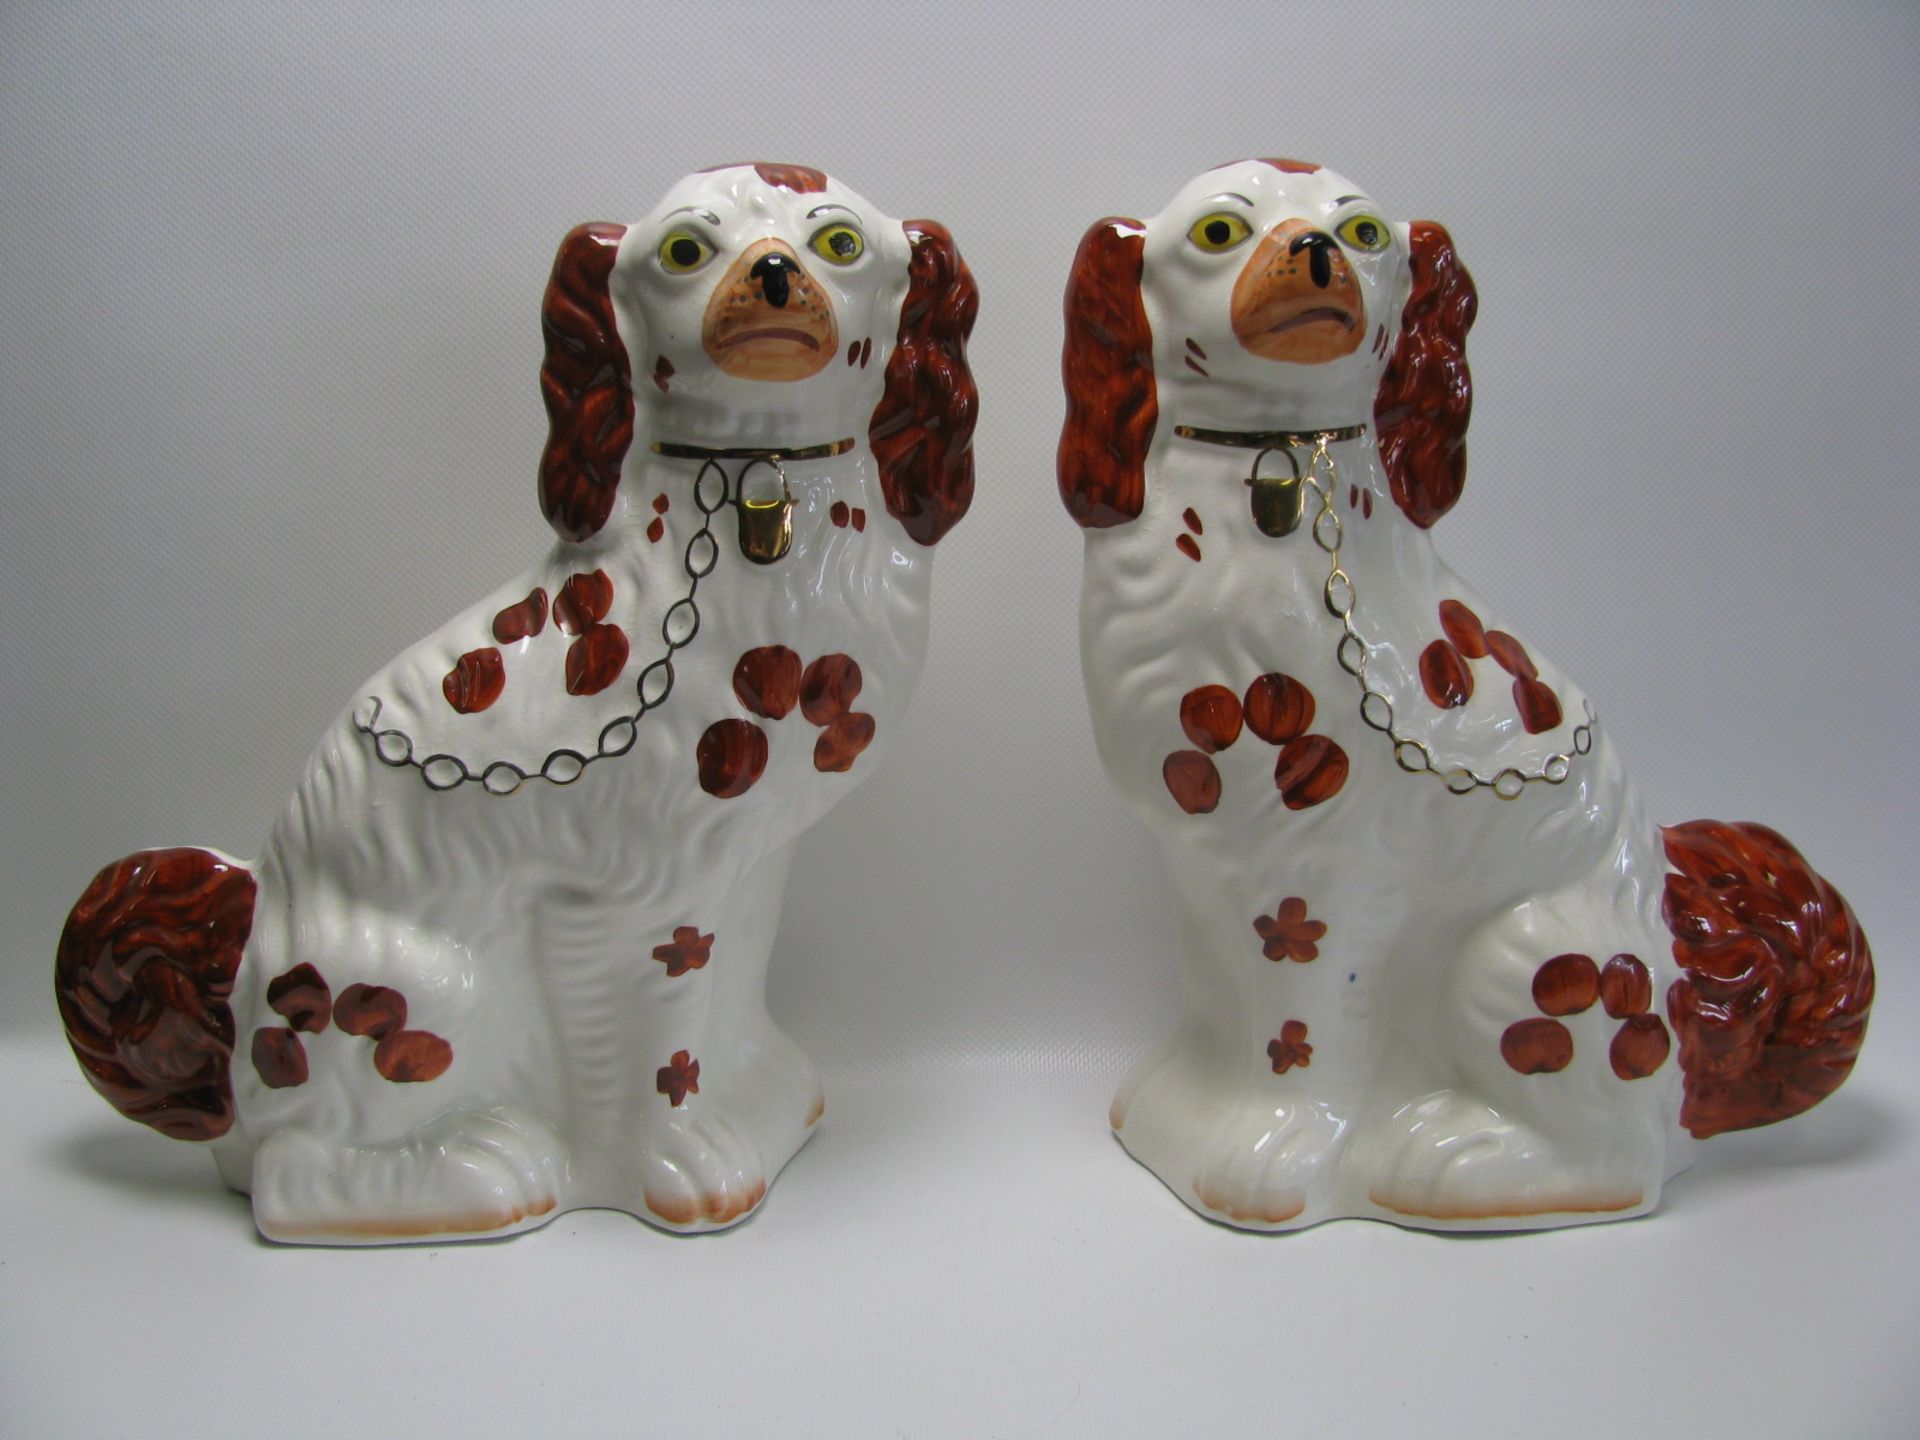 Paar Staffordshire Hunde, sog. "Puffhunde", England, Keramik polychrom glasiert, h 30 cm, d 24 cm.